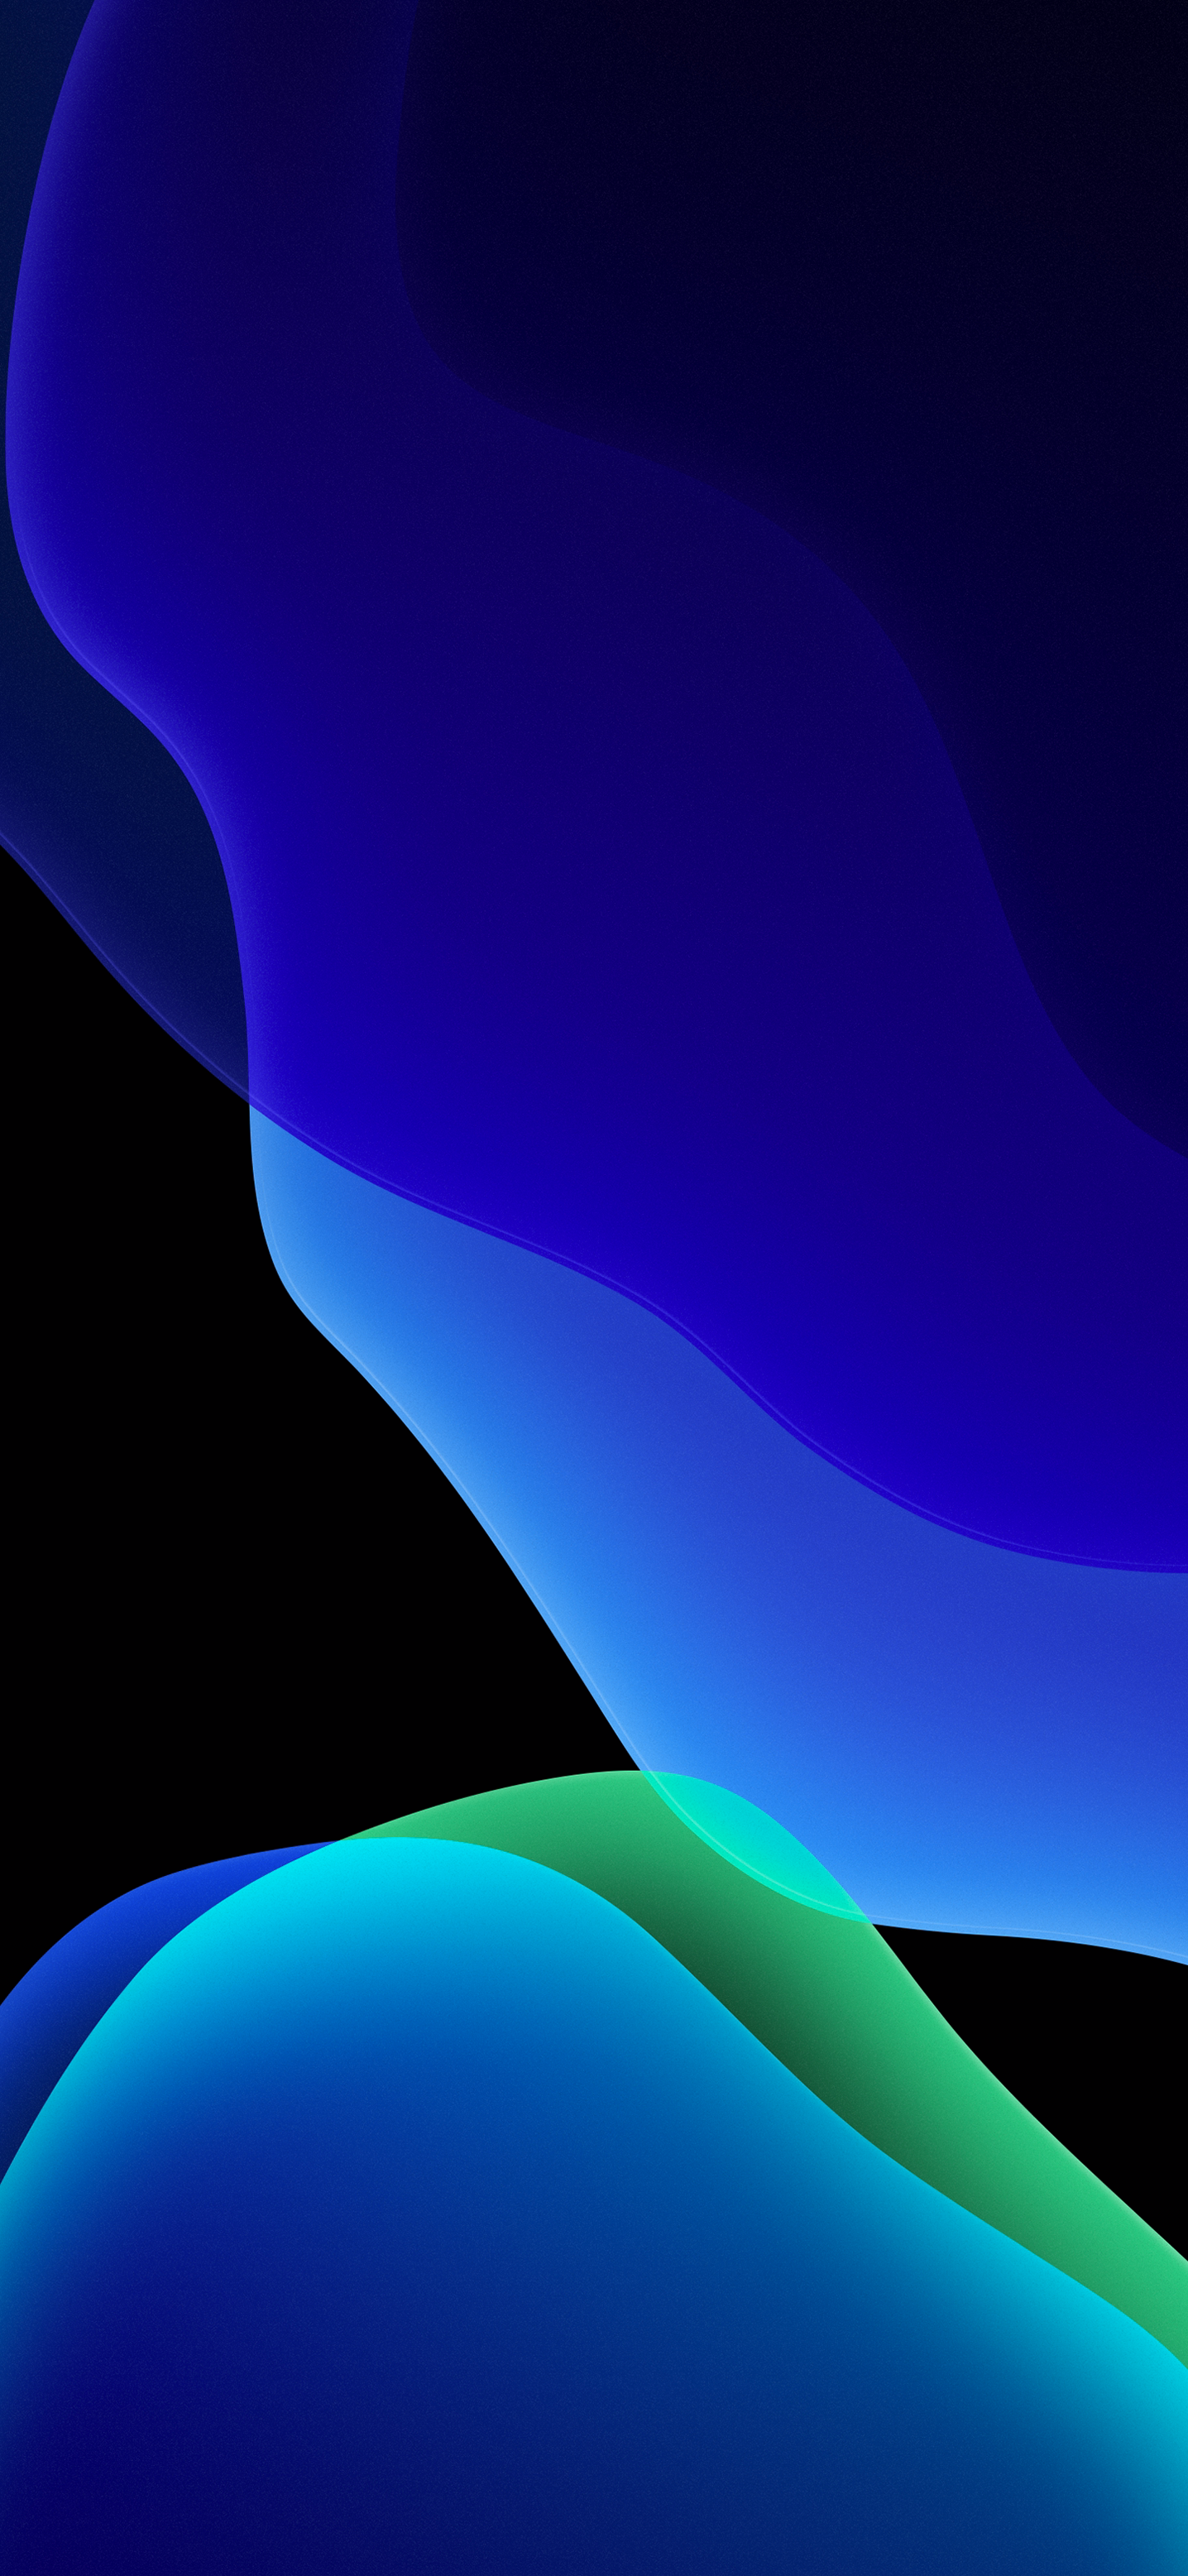 iOS 13 Blue Wallpaper Free iOS 13 Blue Background